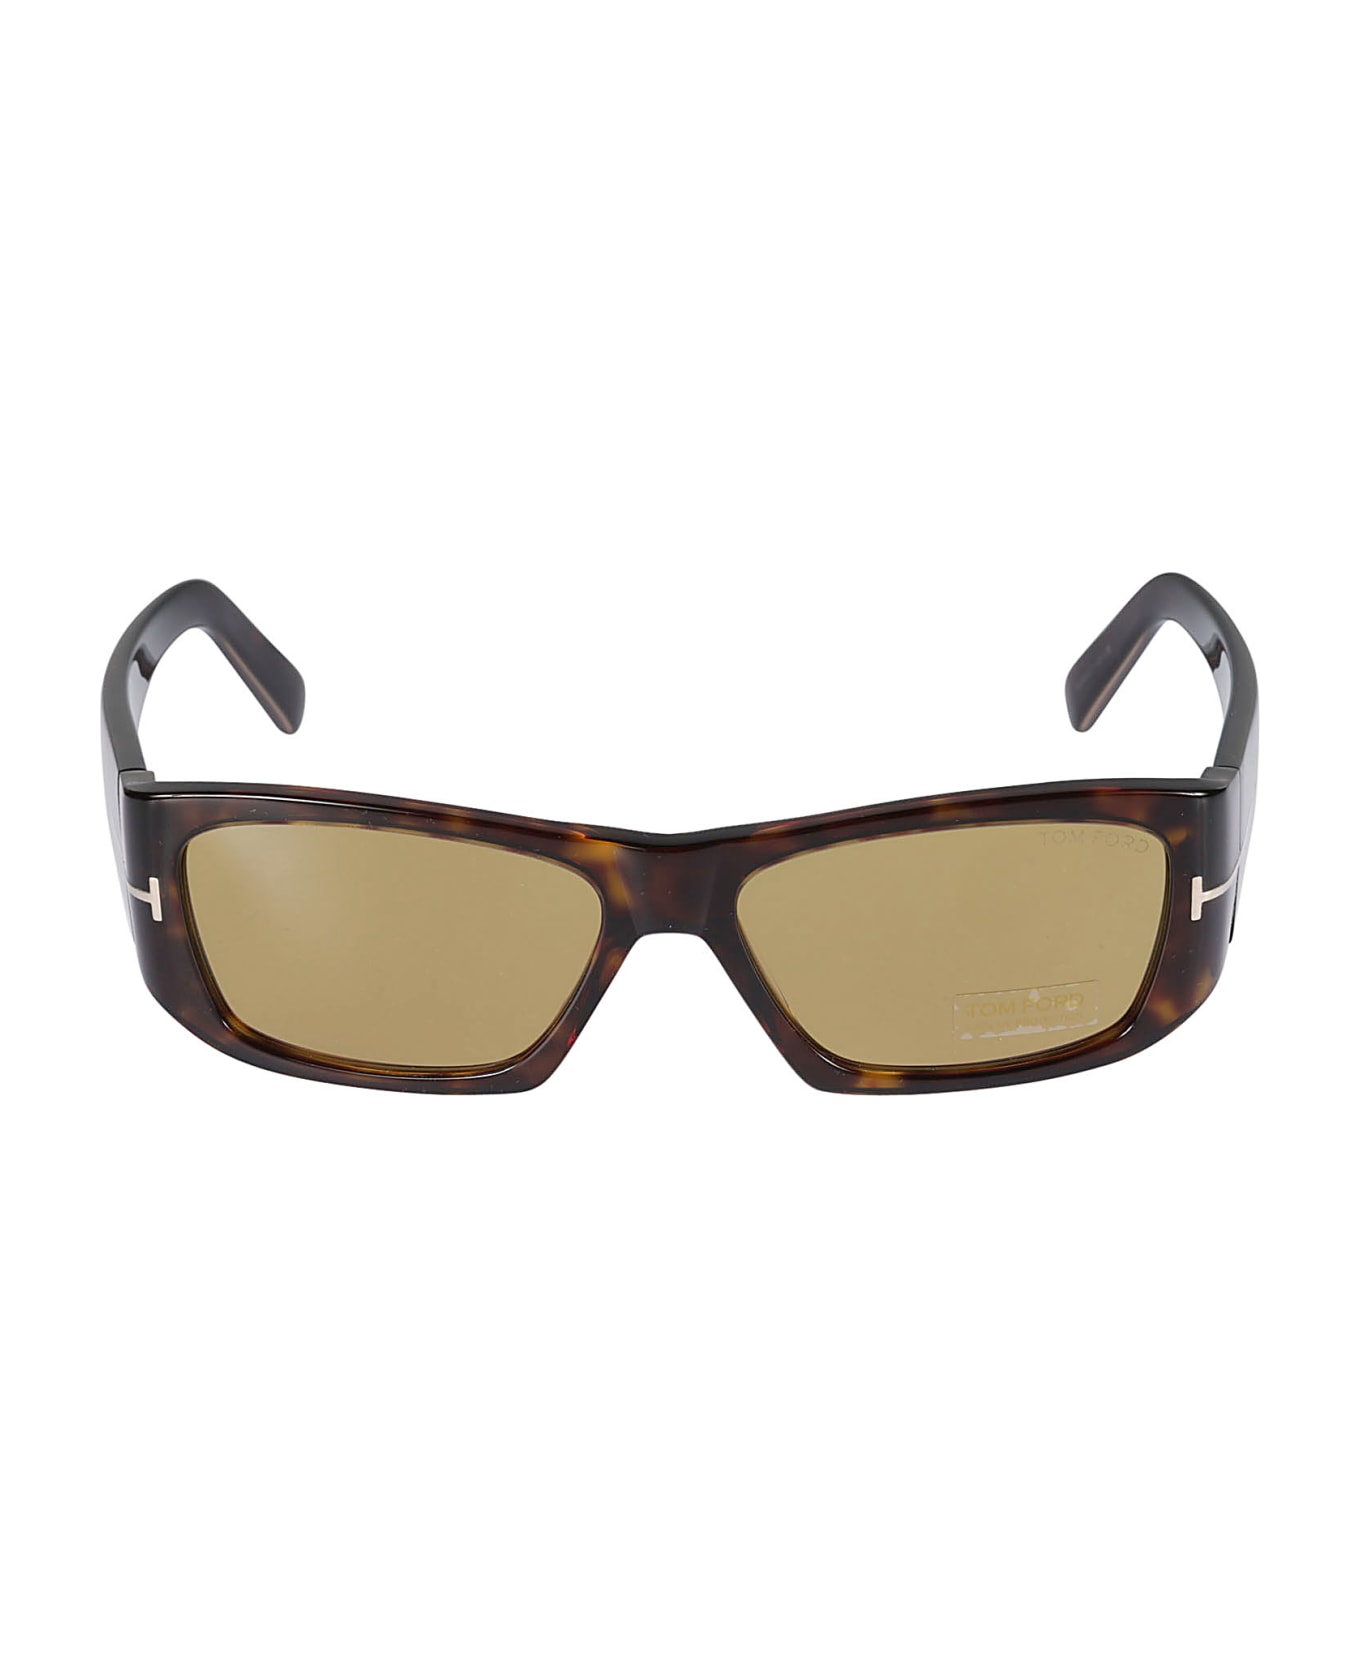 Tom Ford Eyewear Andres-02 Sunglasses - 52E サングラス